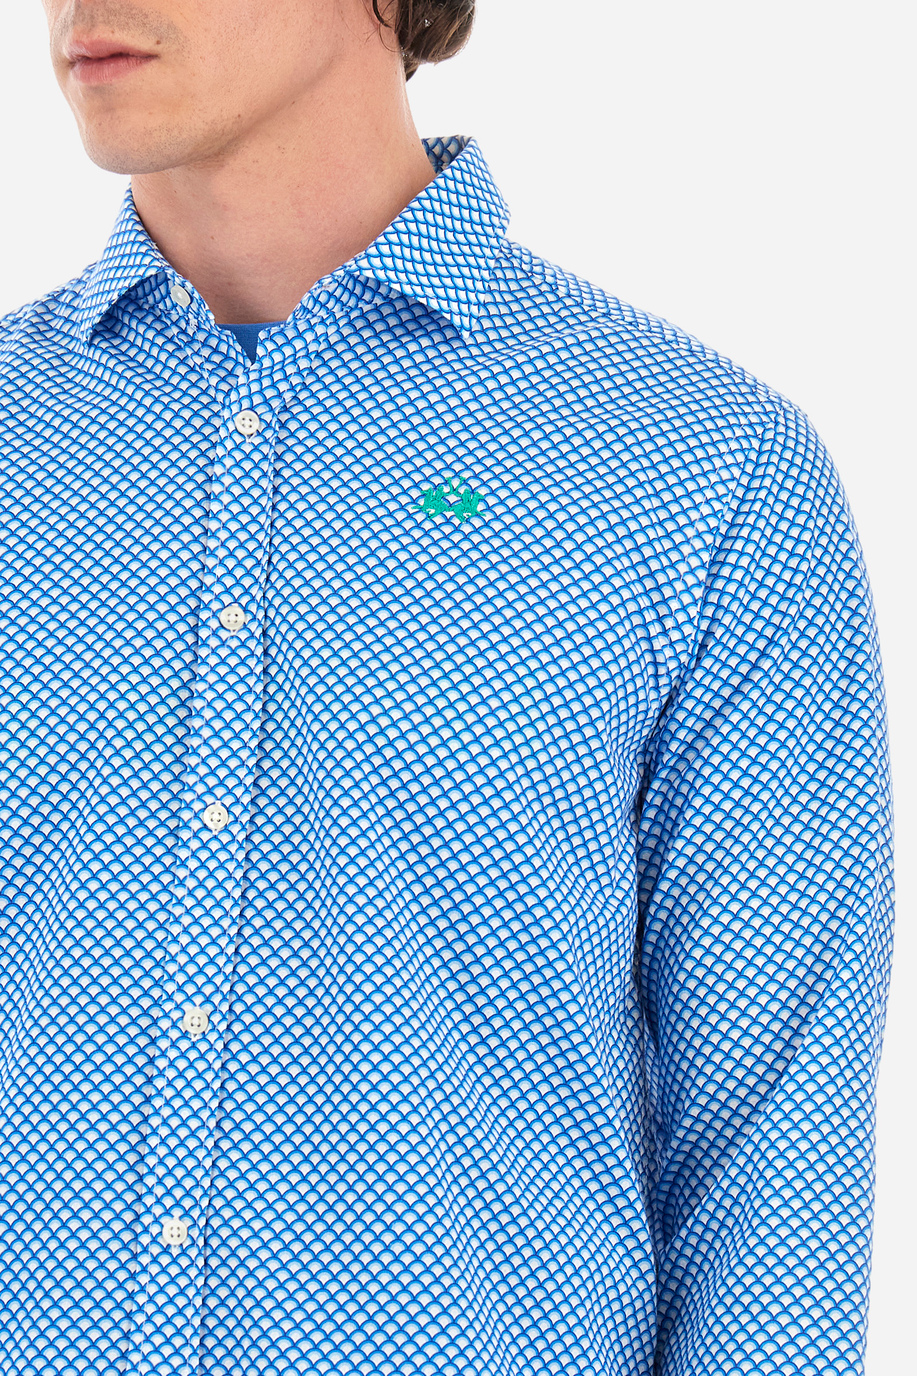 Geometric print poplin shirt - Innocent - Shirts | La Martina - Official Online Shop